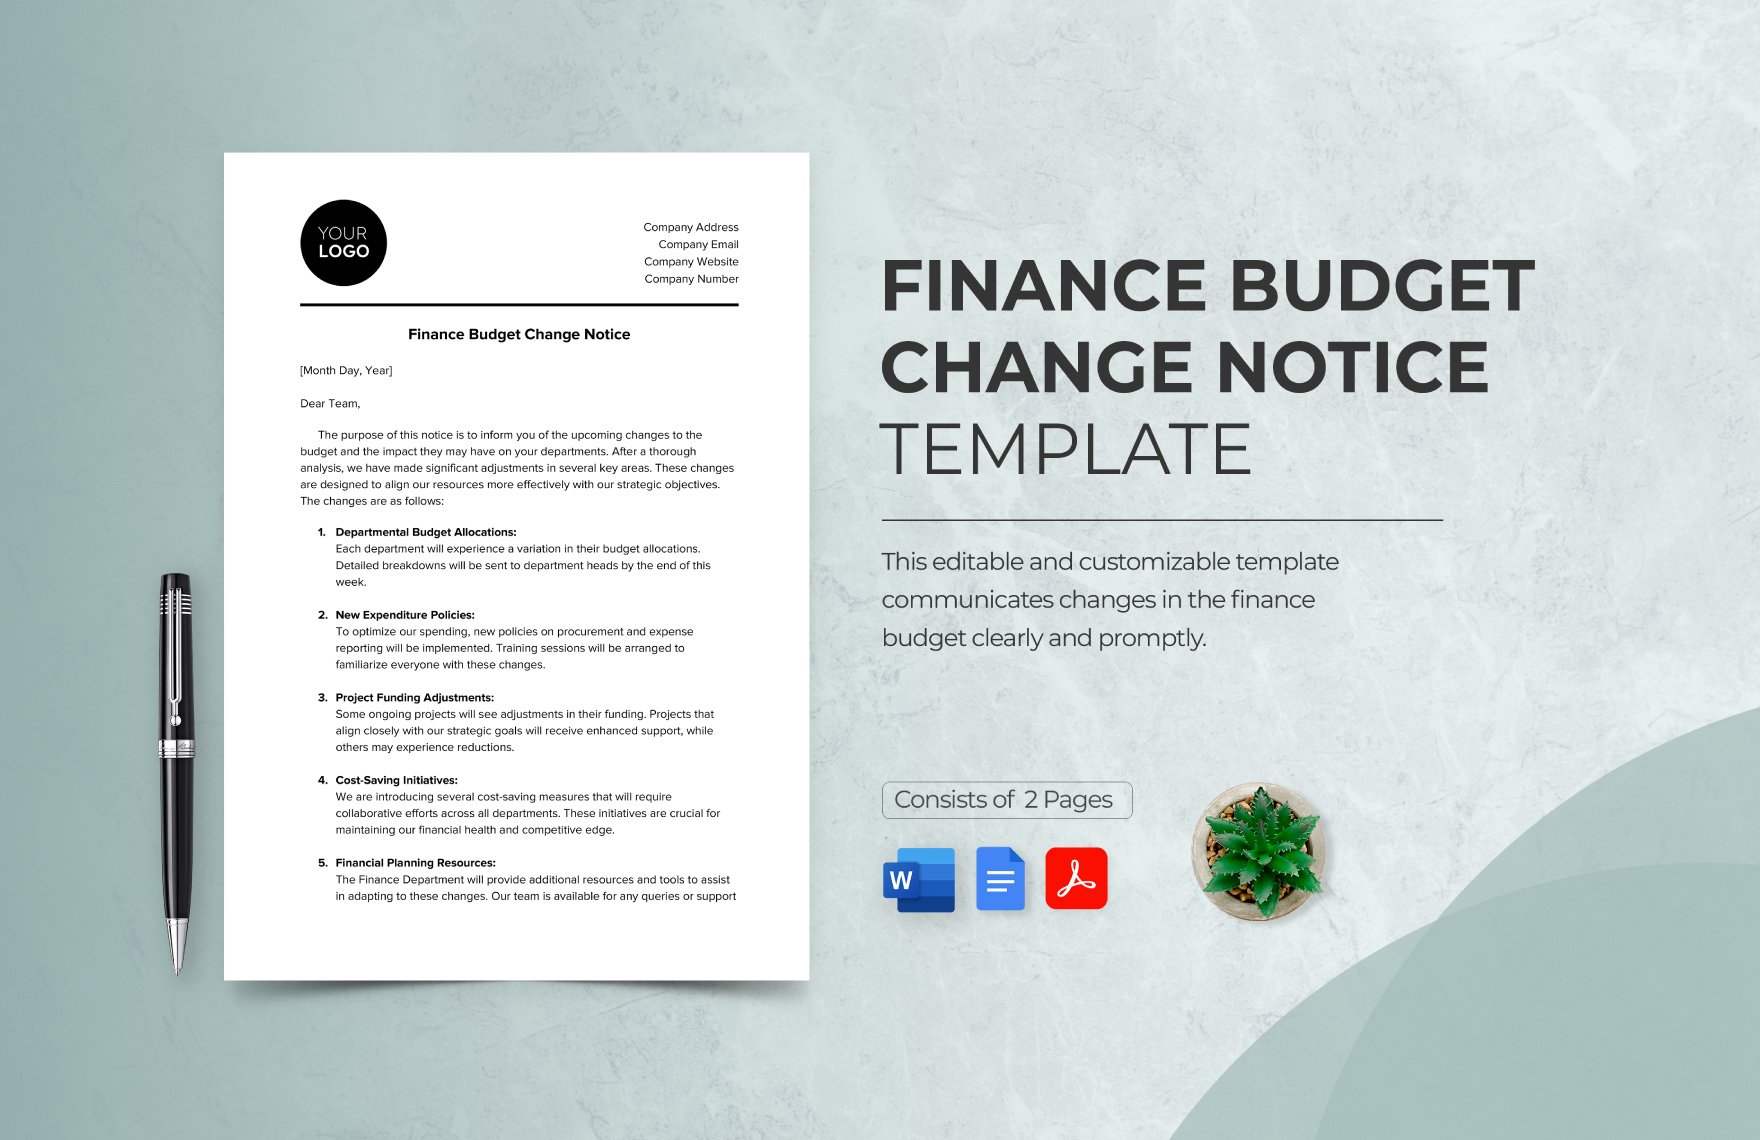 Finance Budget Change Notice Template